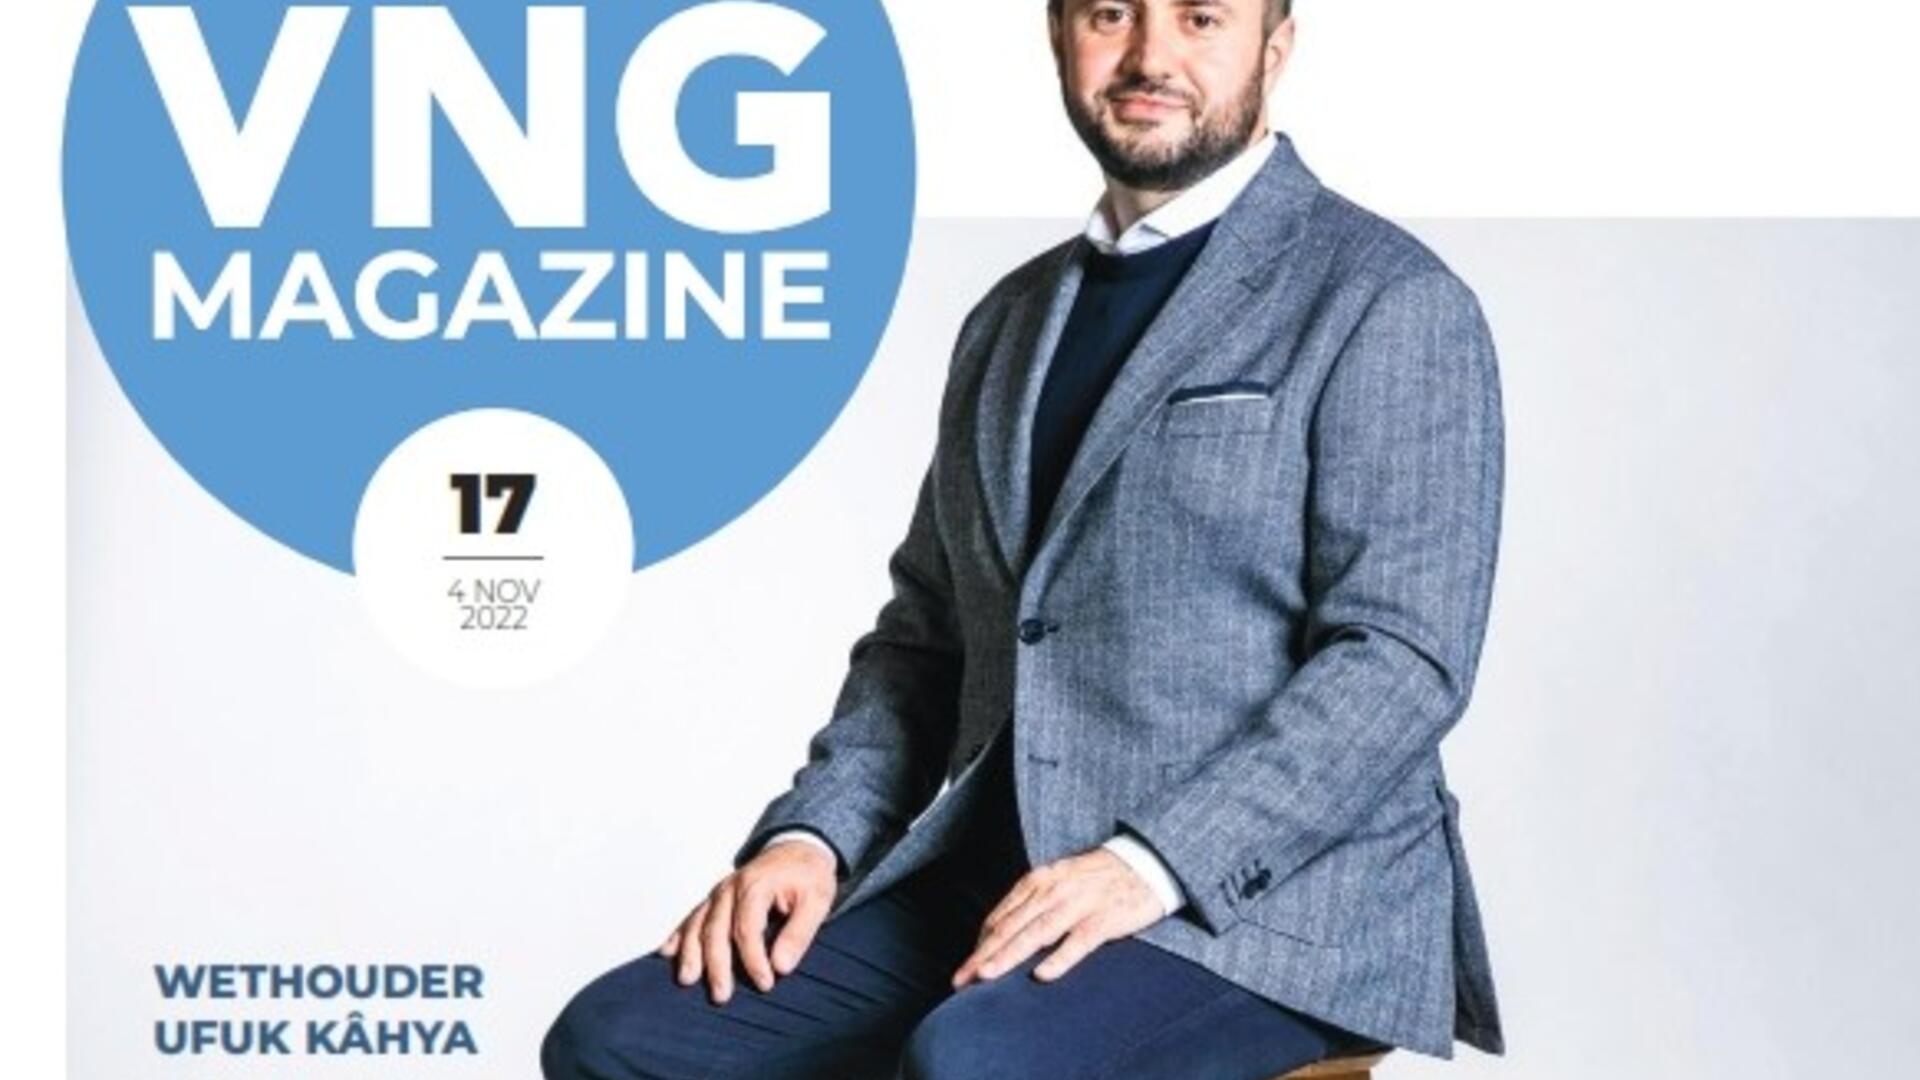 omslag van het vng magazine van 4 november met een foto van wethouder Ufuk Kâhya